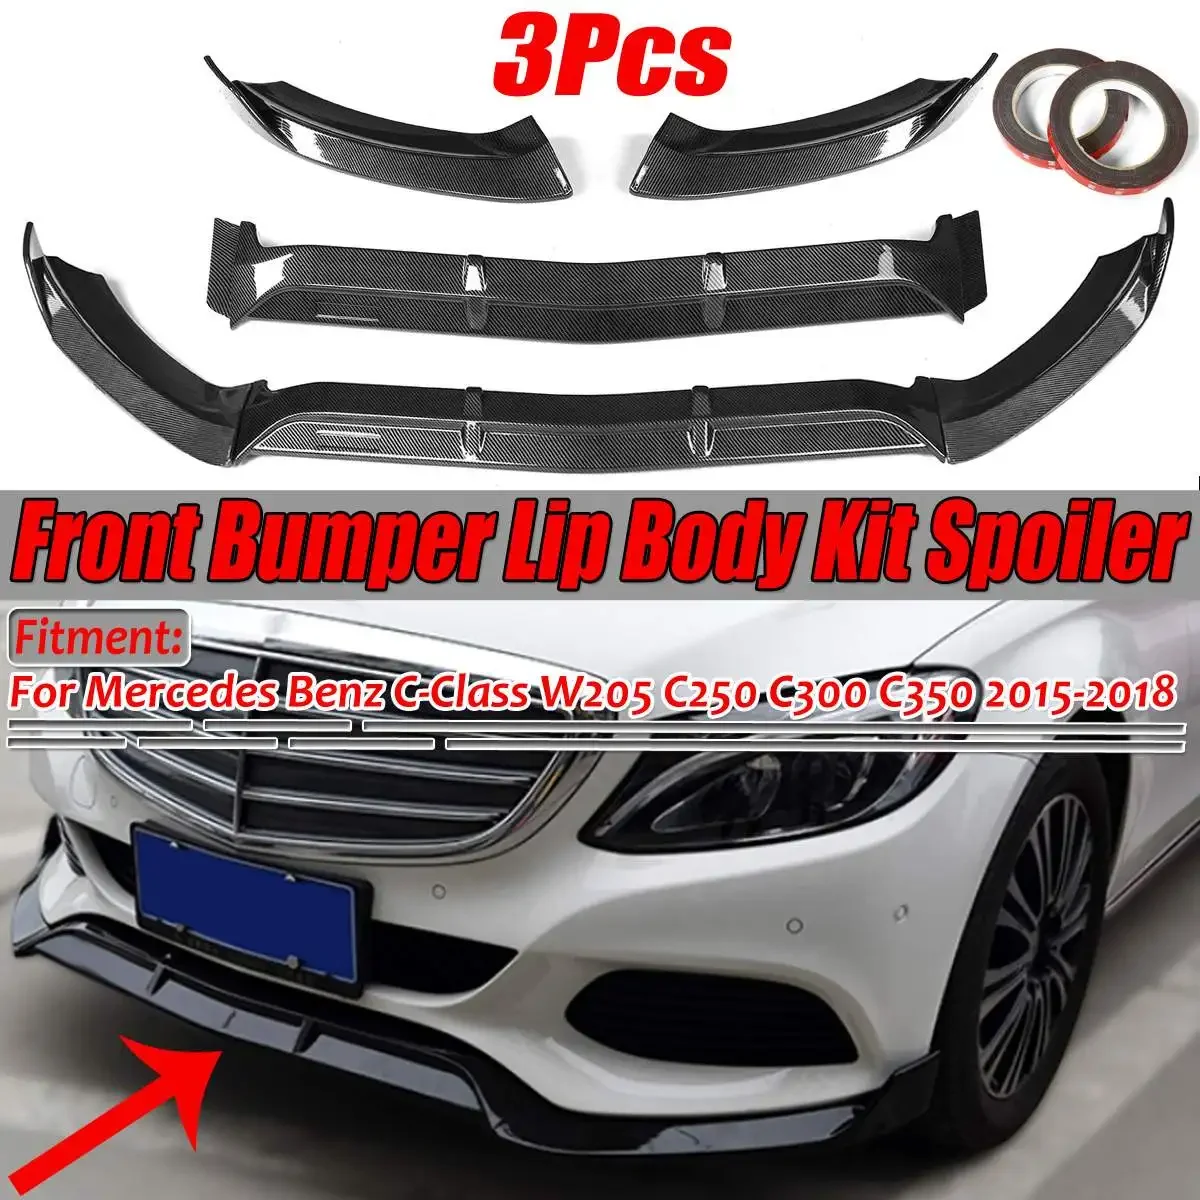 

W205 Car Front Bumper Splitter Lip Diffuser Guard Spoiler For Mercedes For Benz C-Class W205 C250 C300 C350 2015-2018 Body Kit